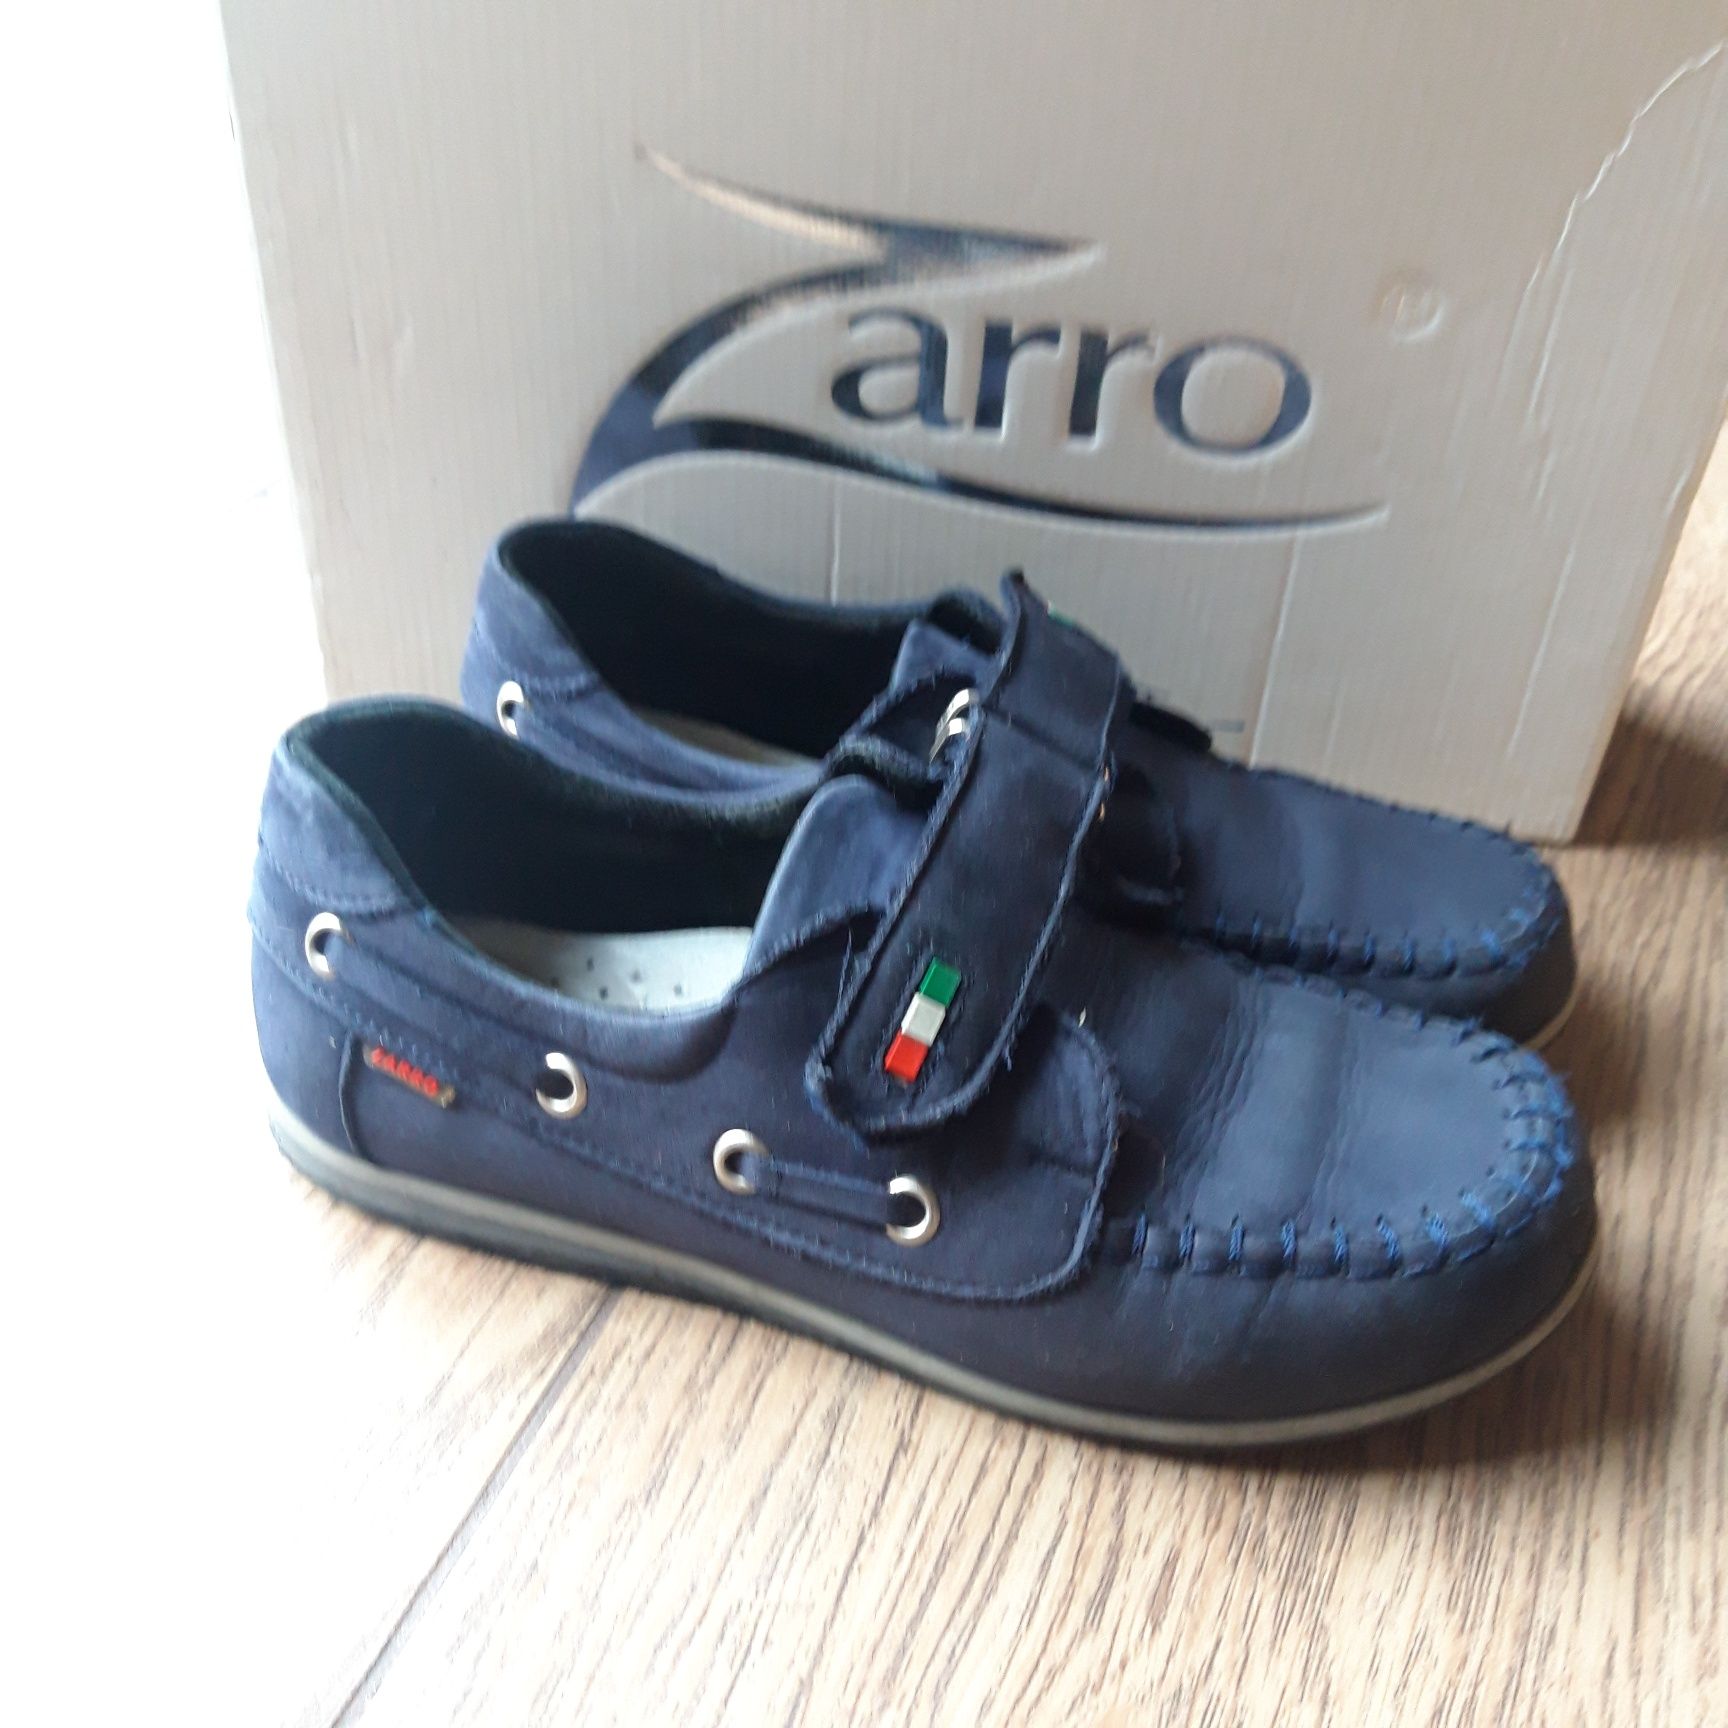 Buty skórzane Zarro